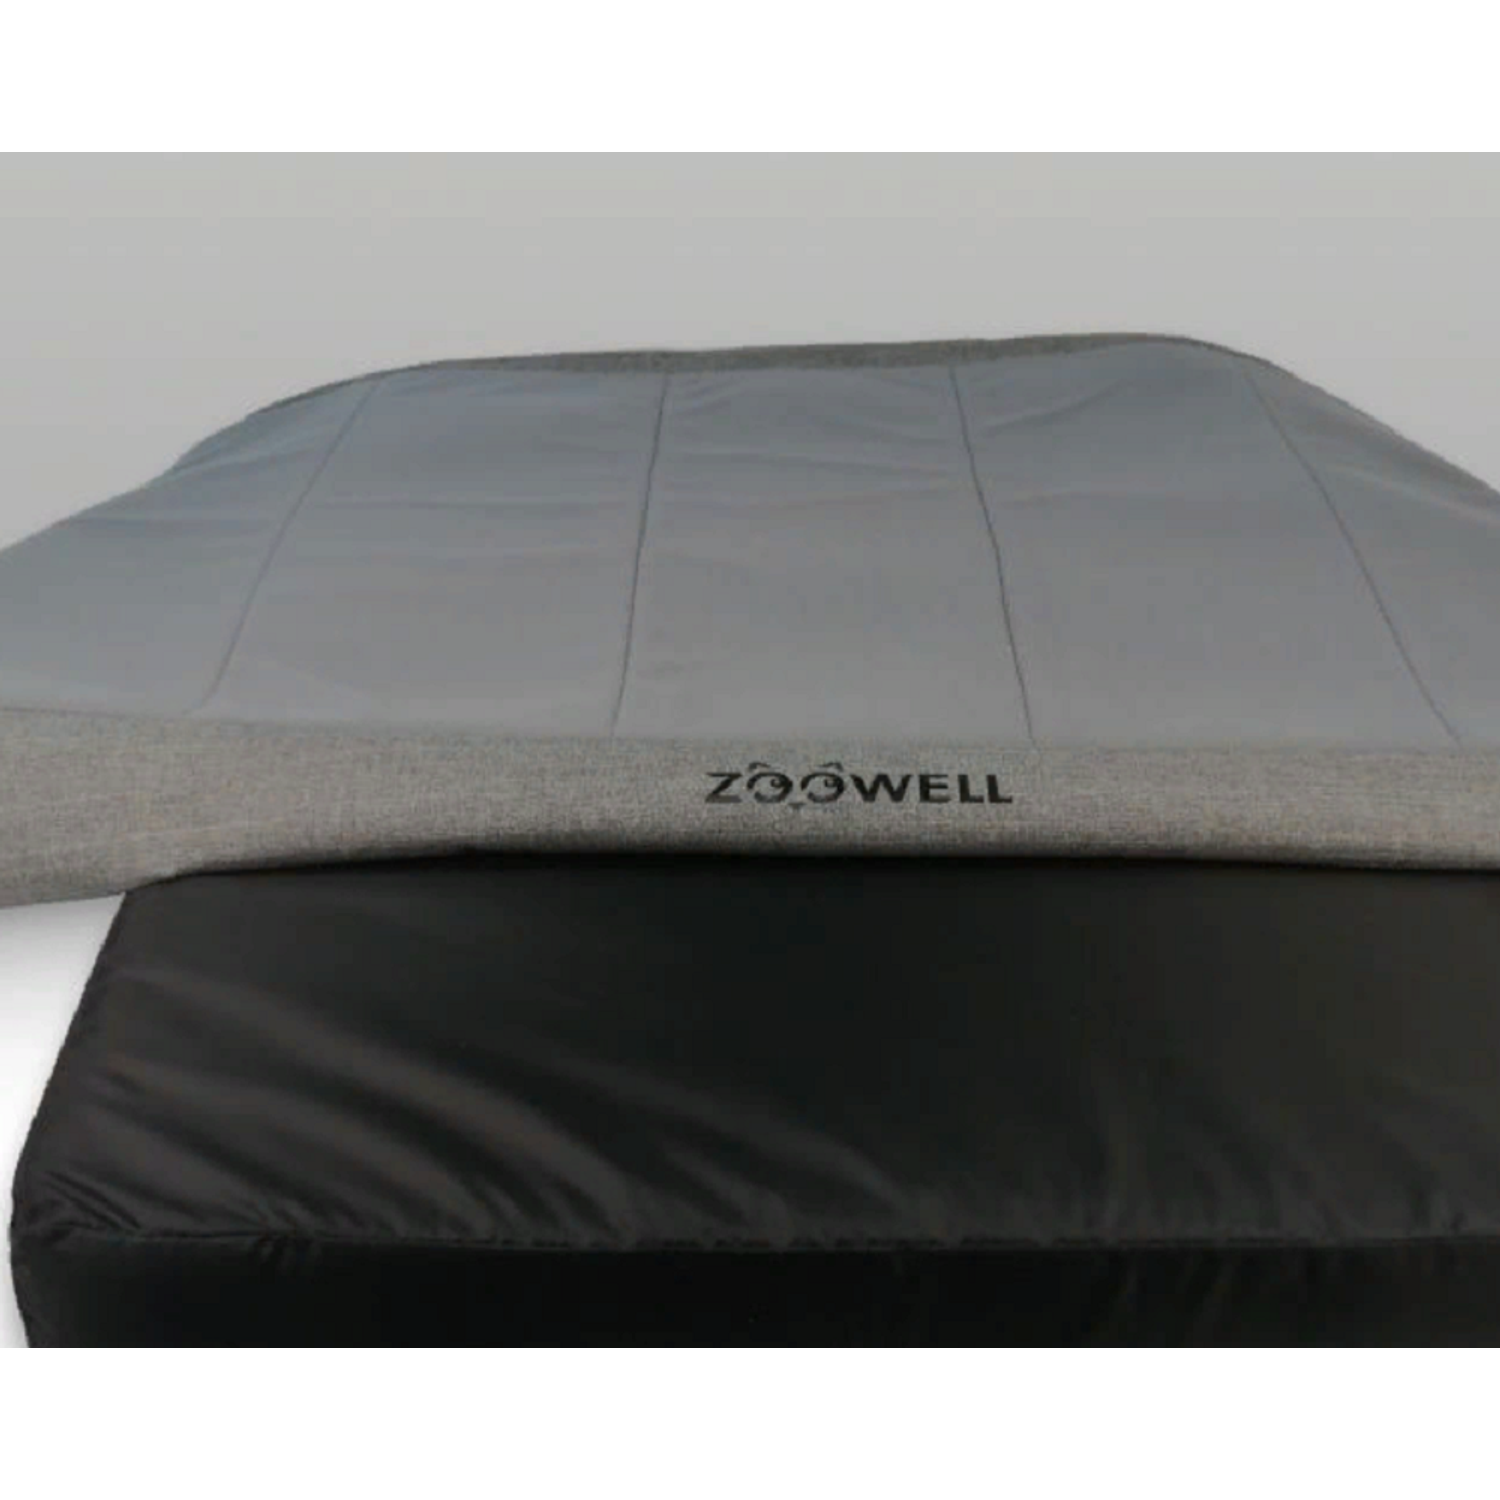 Лежанка для животных ZDK Zoowell Premium L Grey 89x56x10 см с подогревом - фото 2